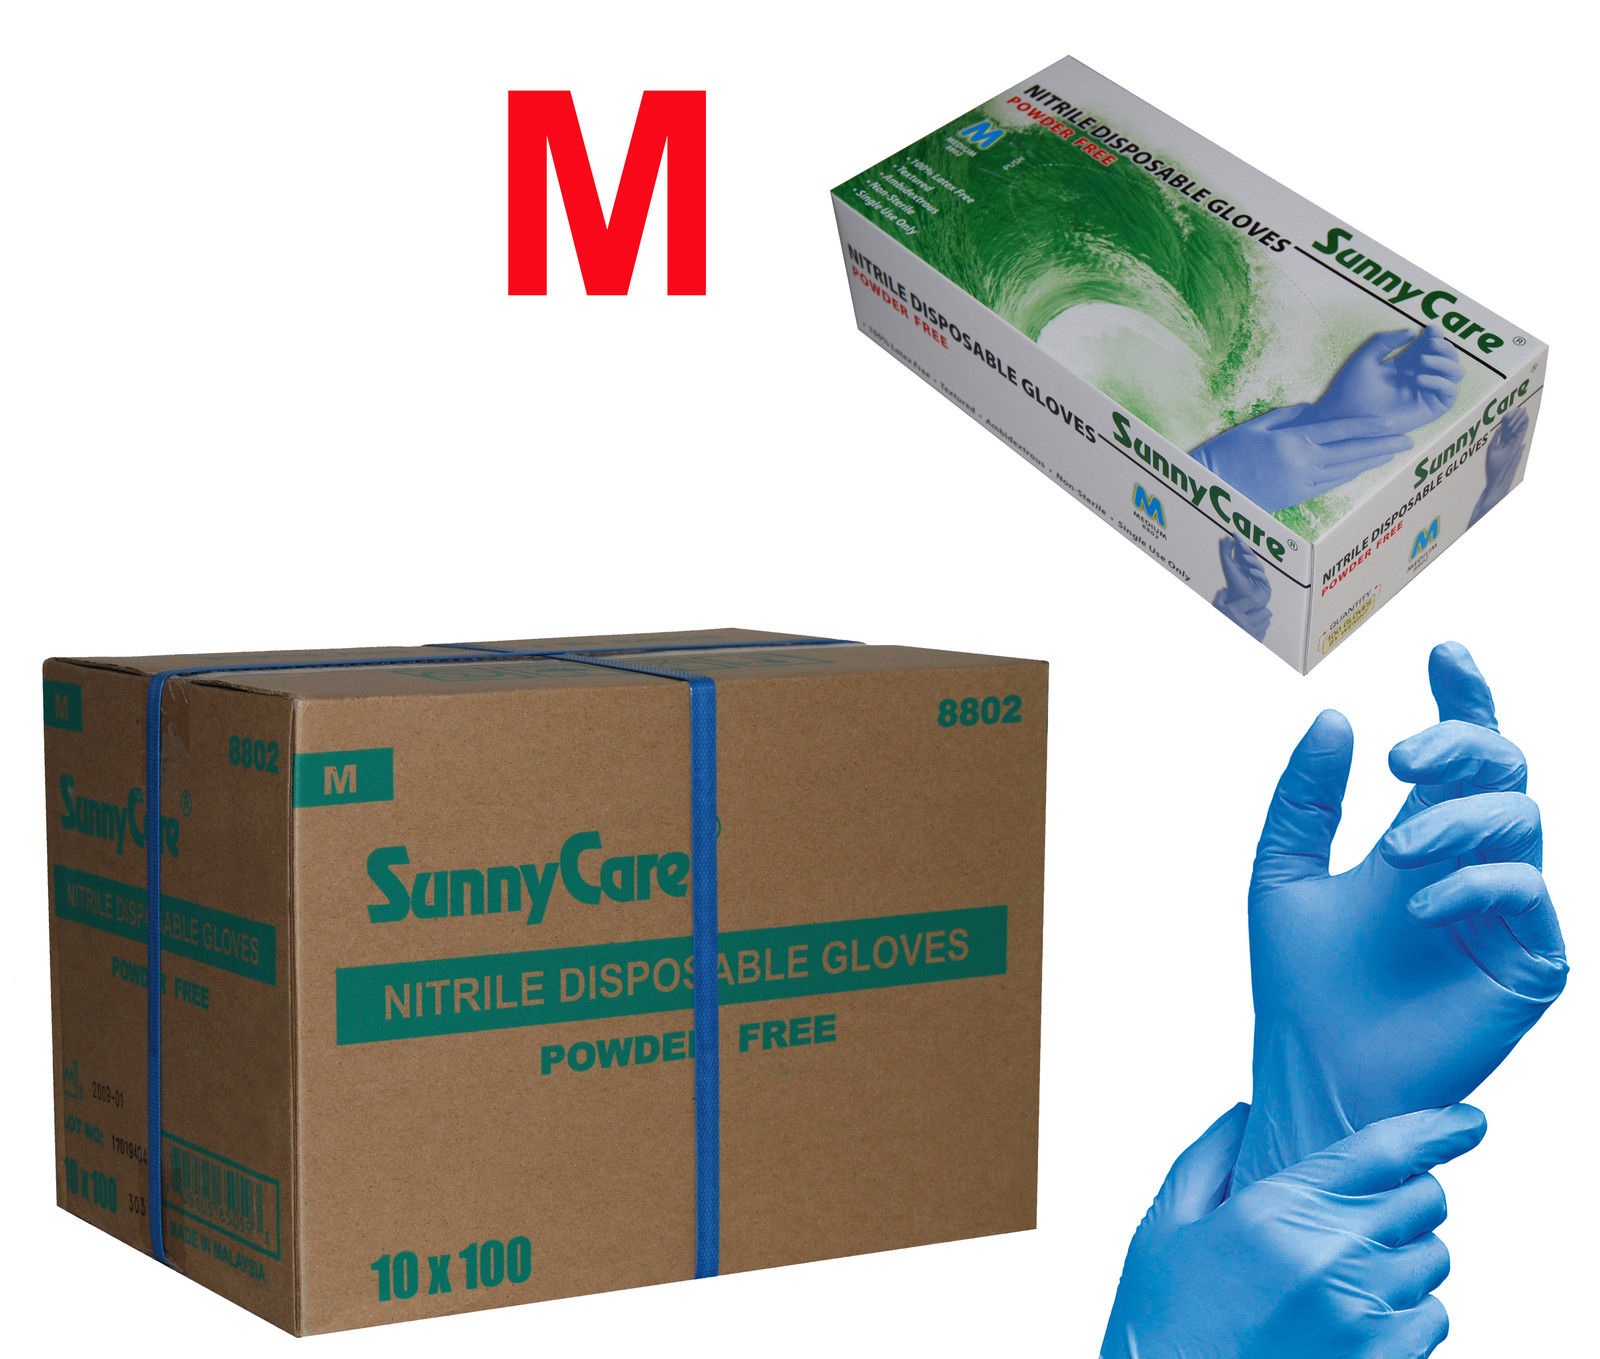 M Latex Vinyl Free 100 SunnyCare #8802 Nitrile Disposable Gloves Powder Free 